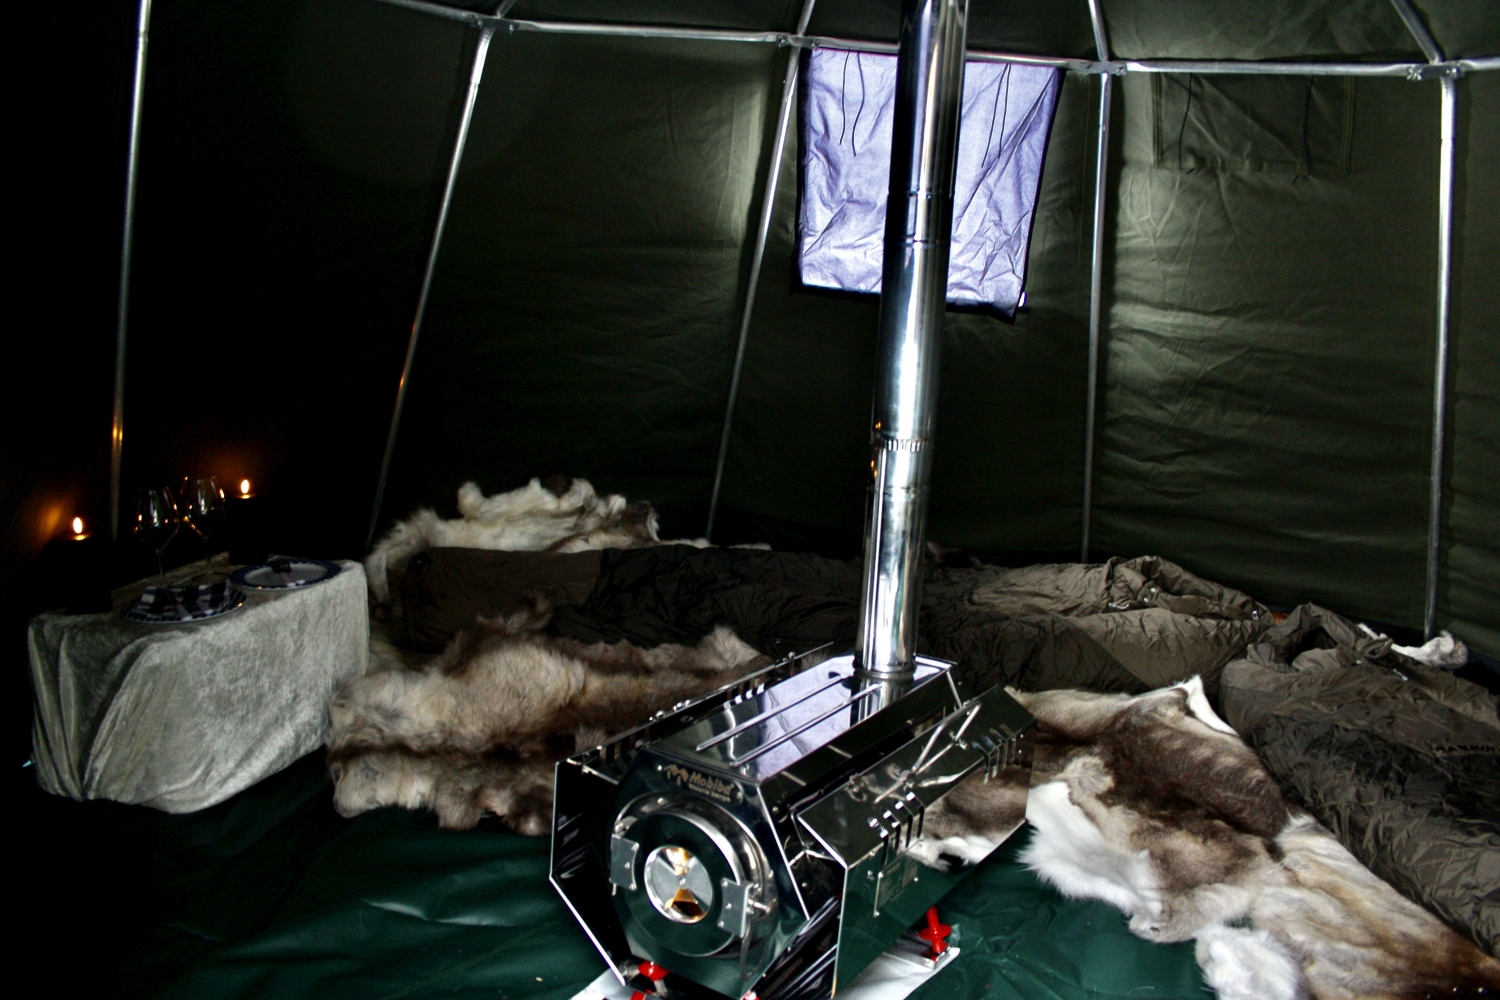 Sleeping area inside tent